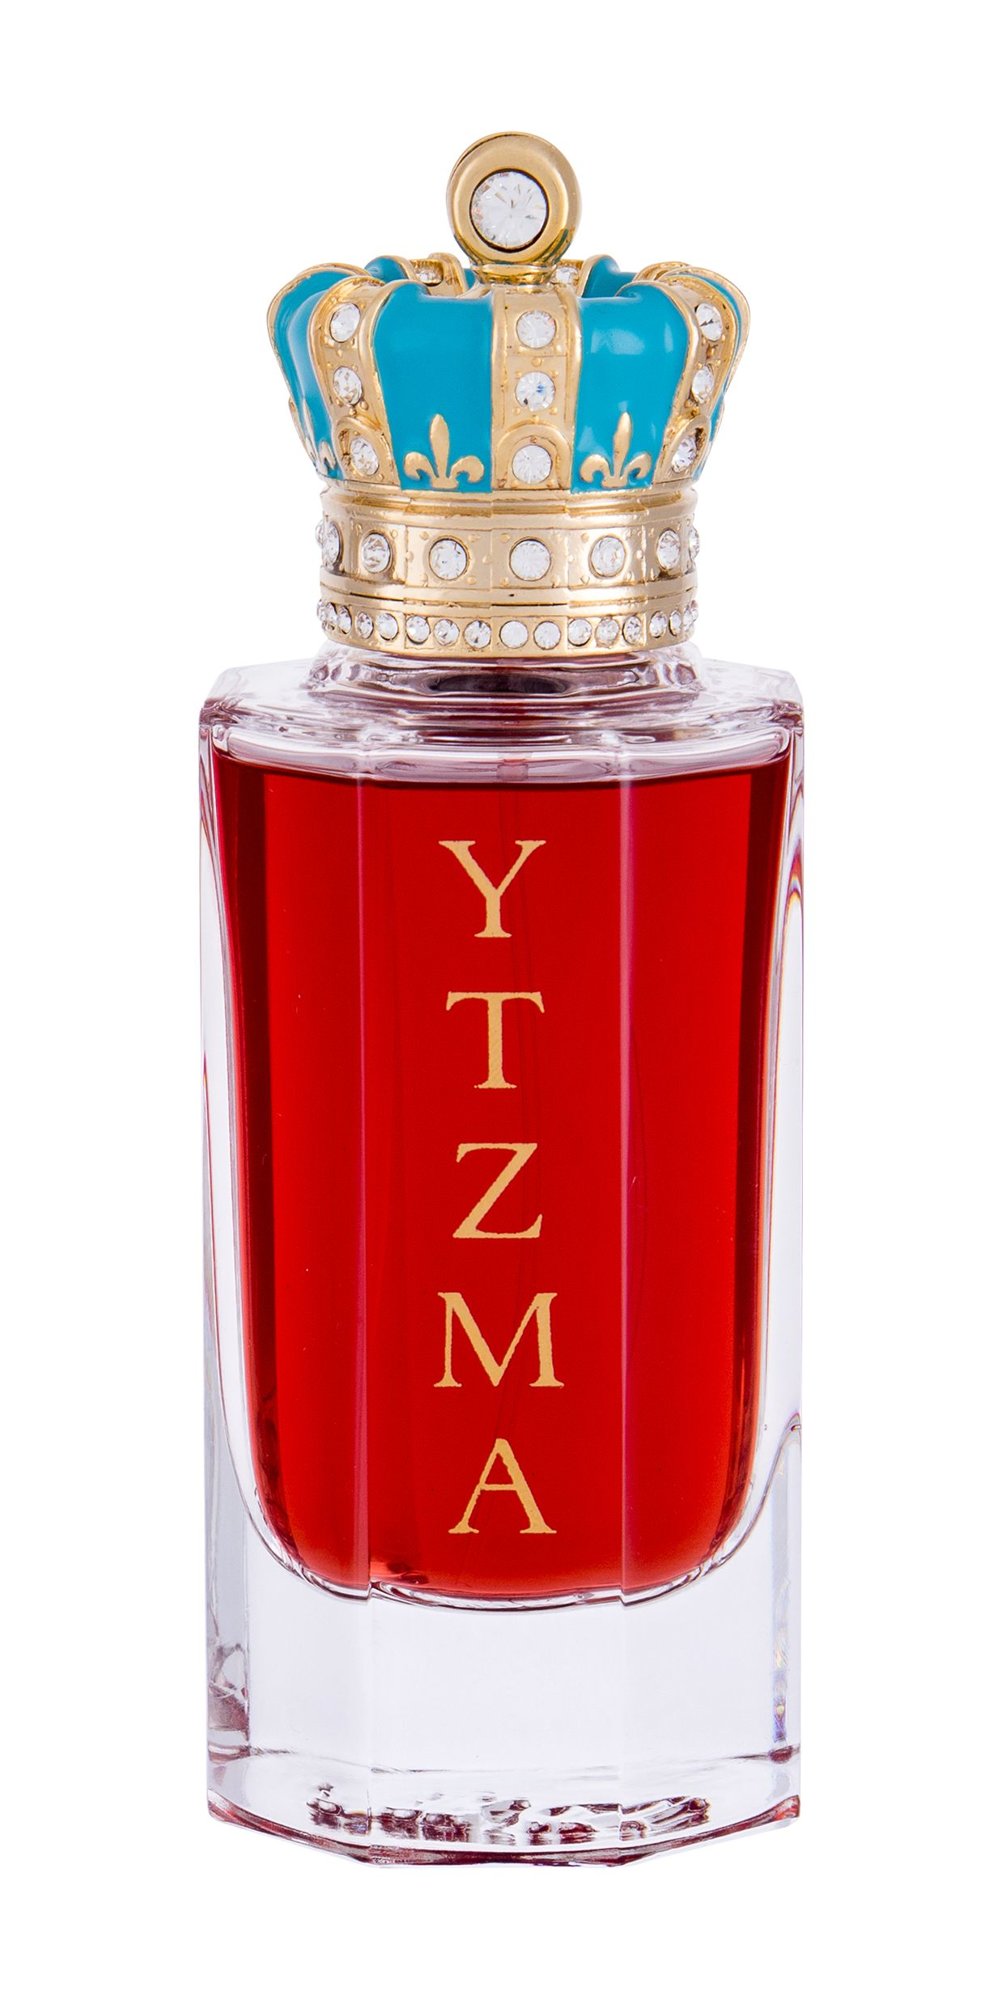 Royal Crown Ytzma